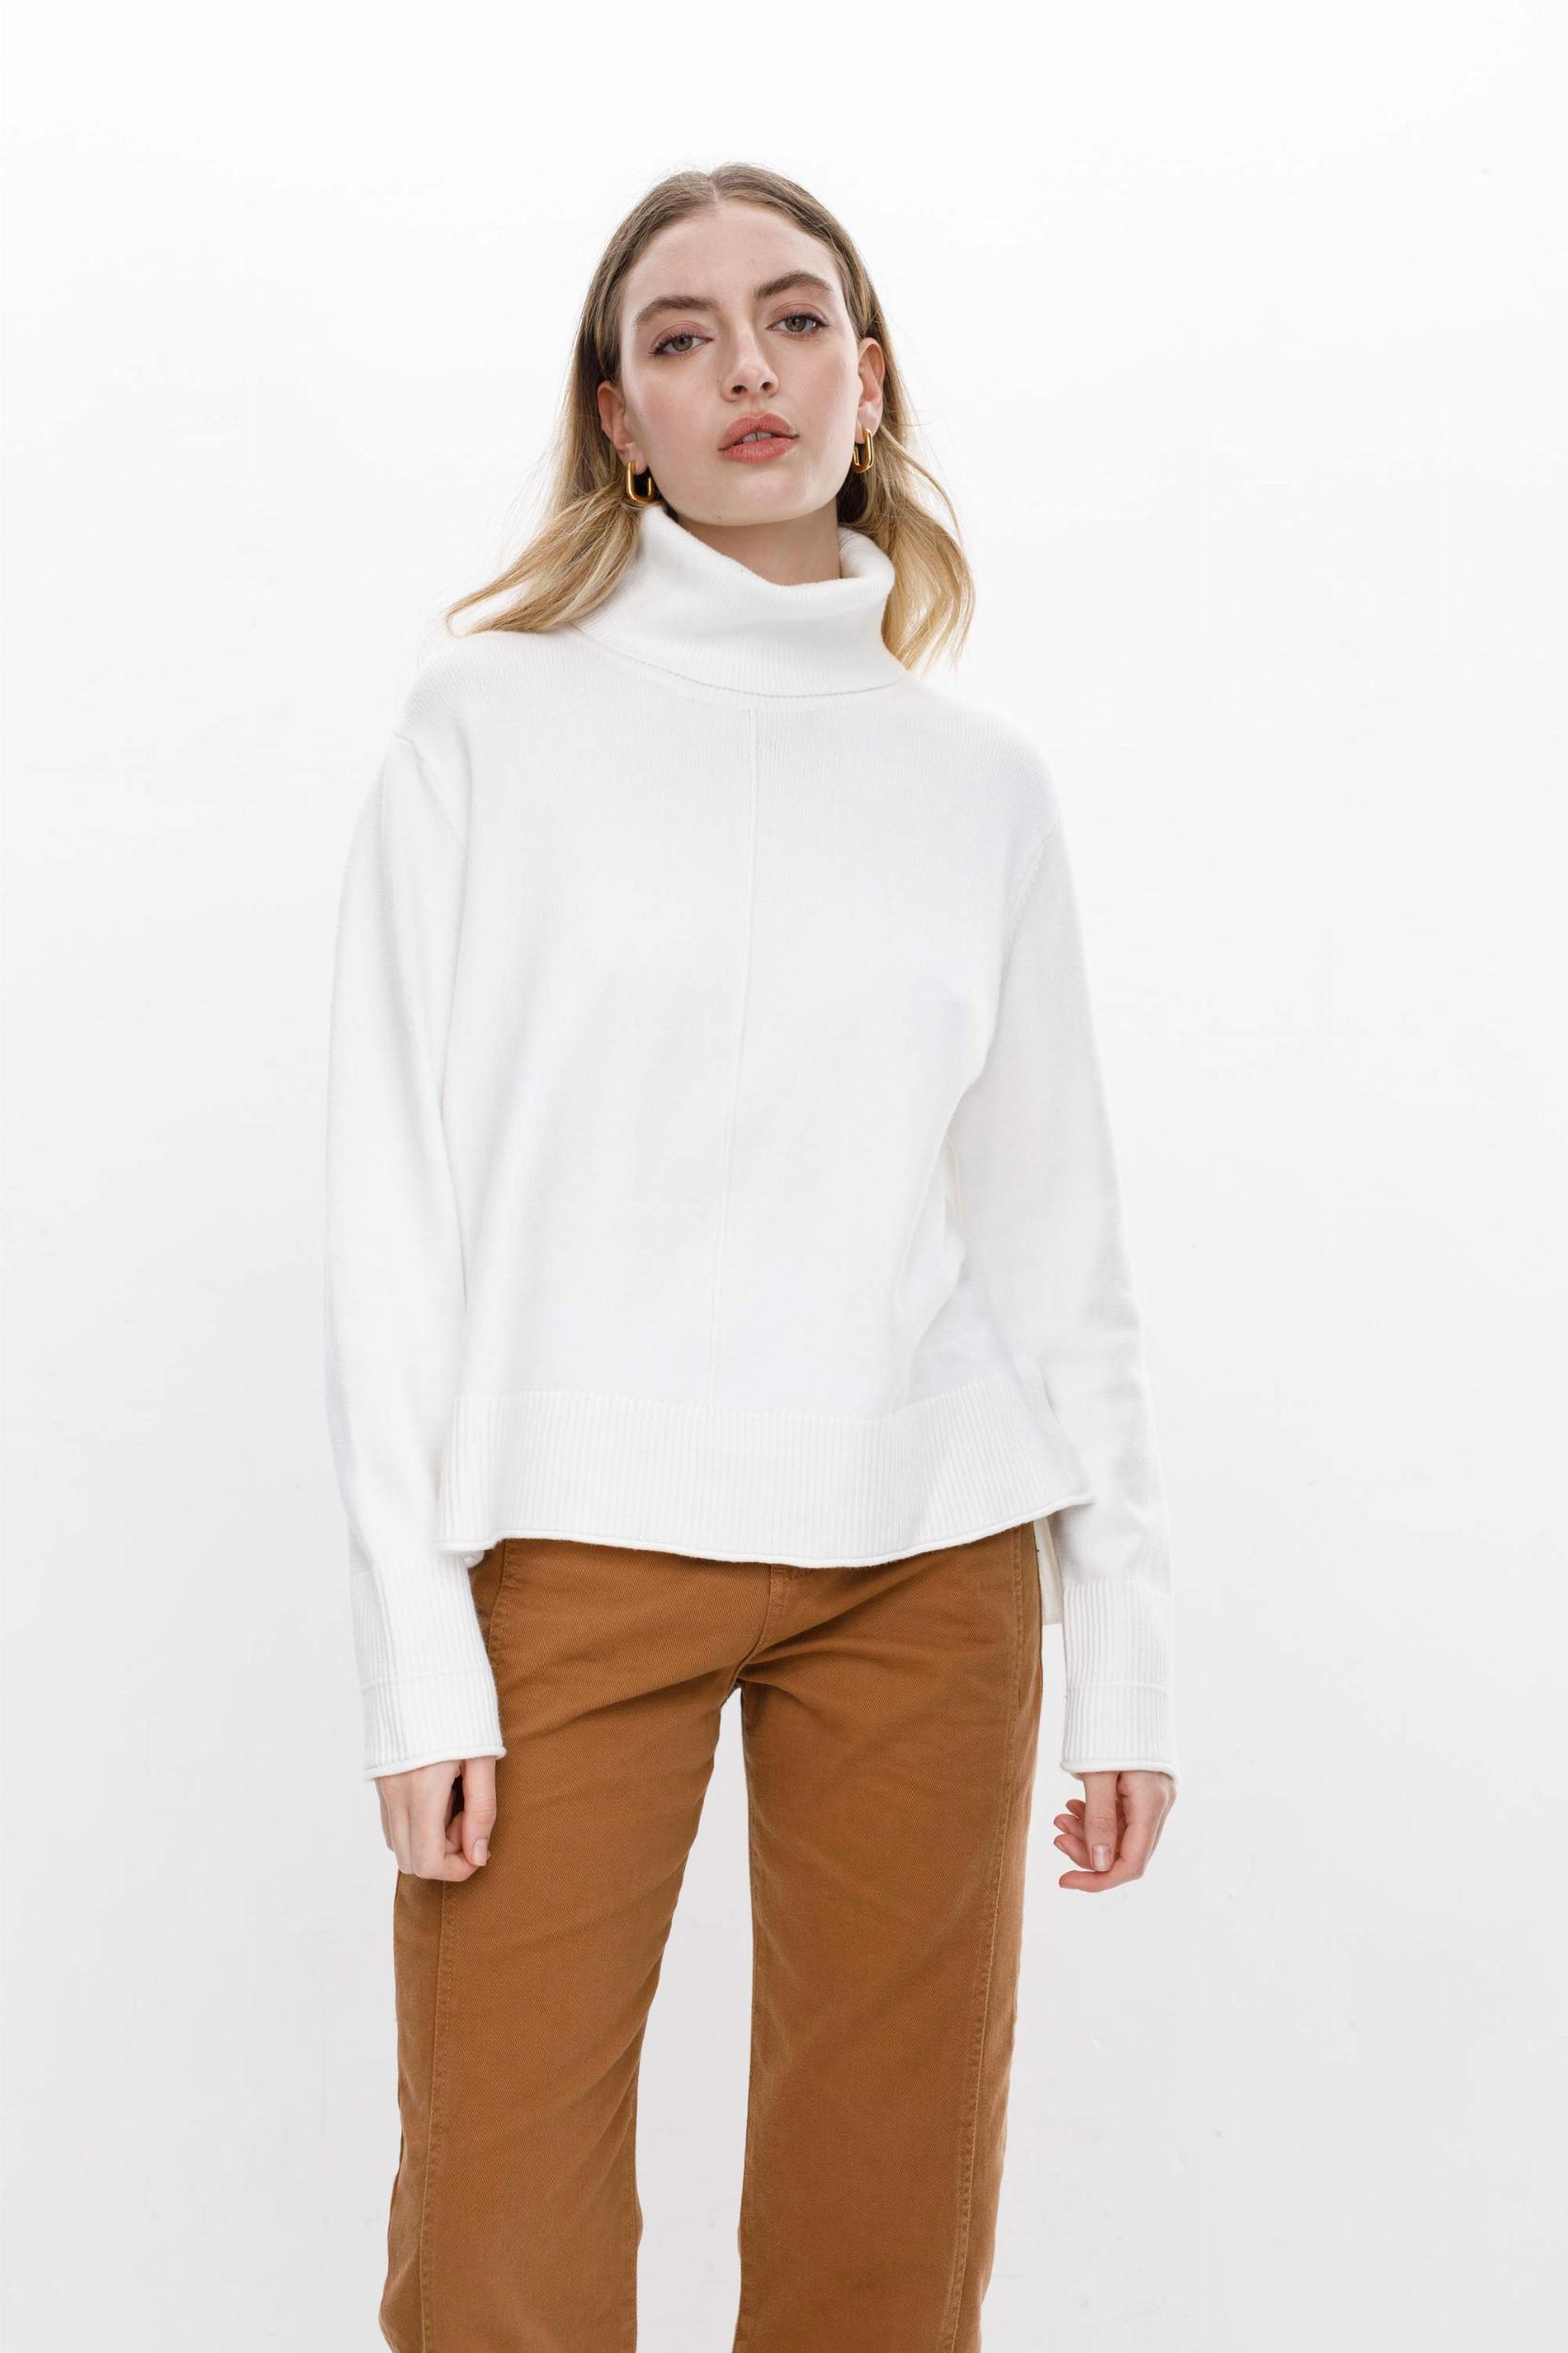 Sweater Polera Serrana blanco talle unico